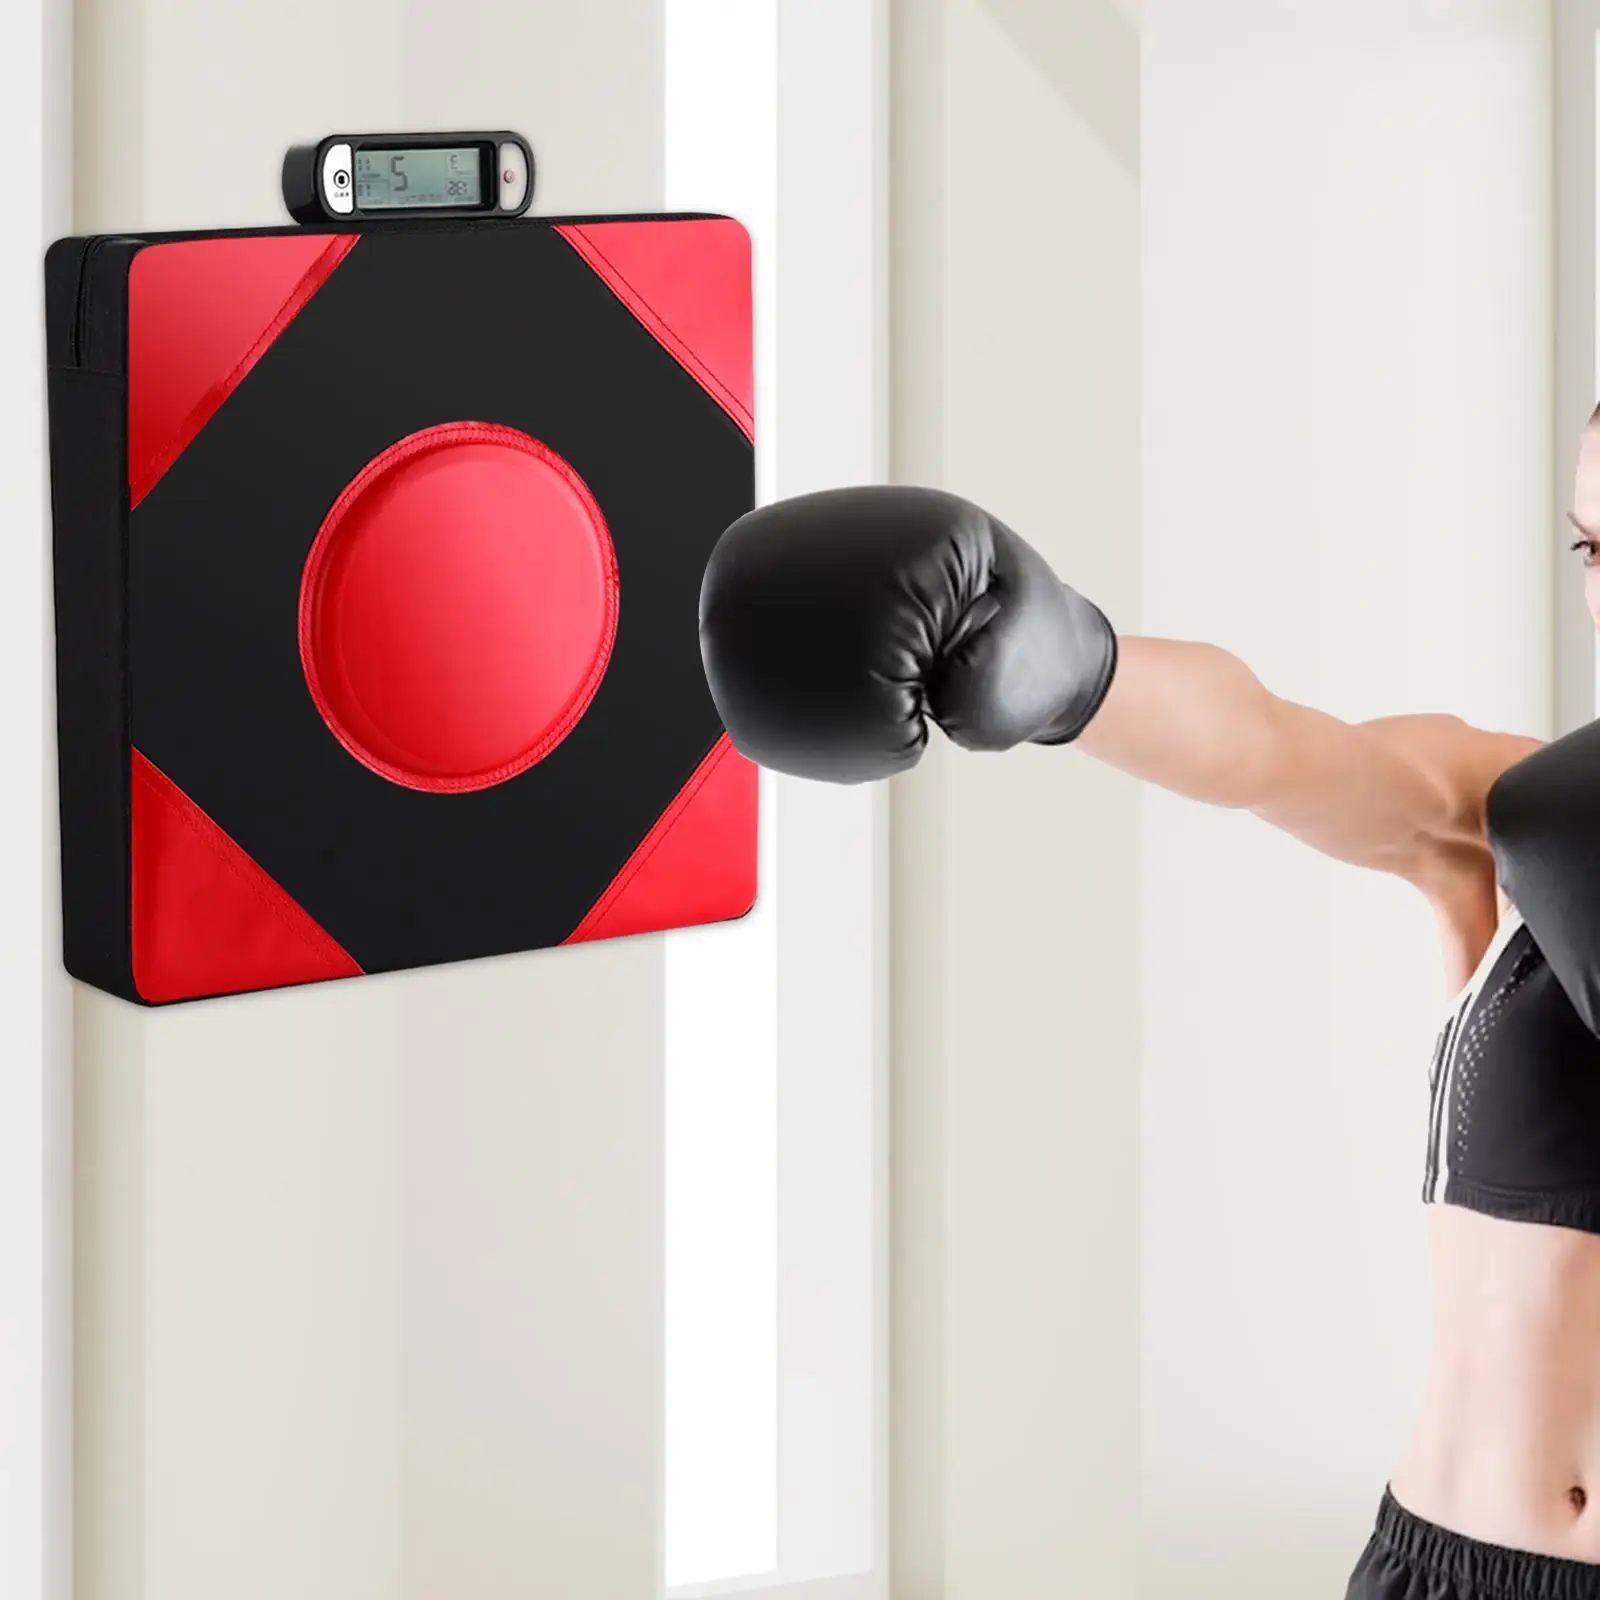 Wall Punch Pads Digital Display Taekwondo Wall Mounted Boxing Strength Tester